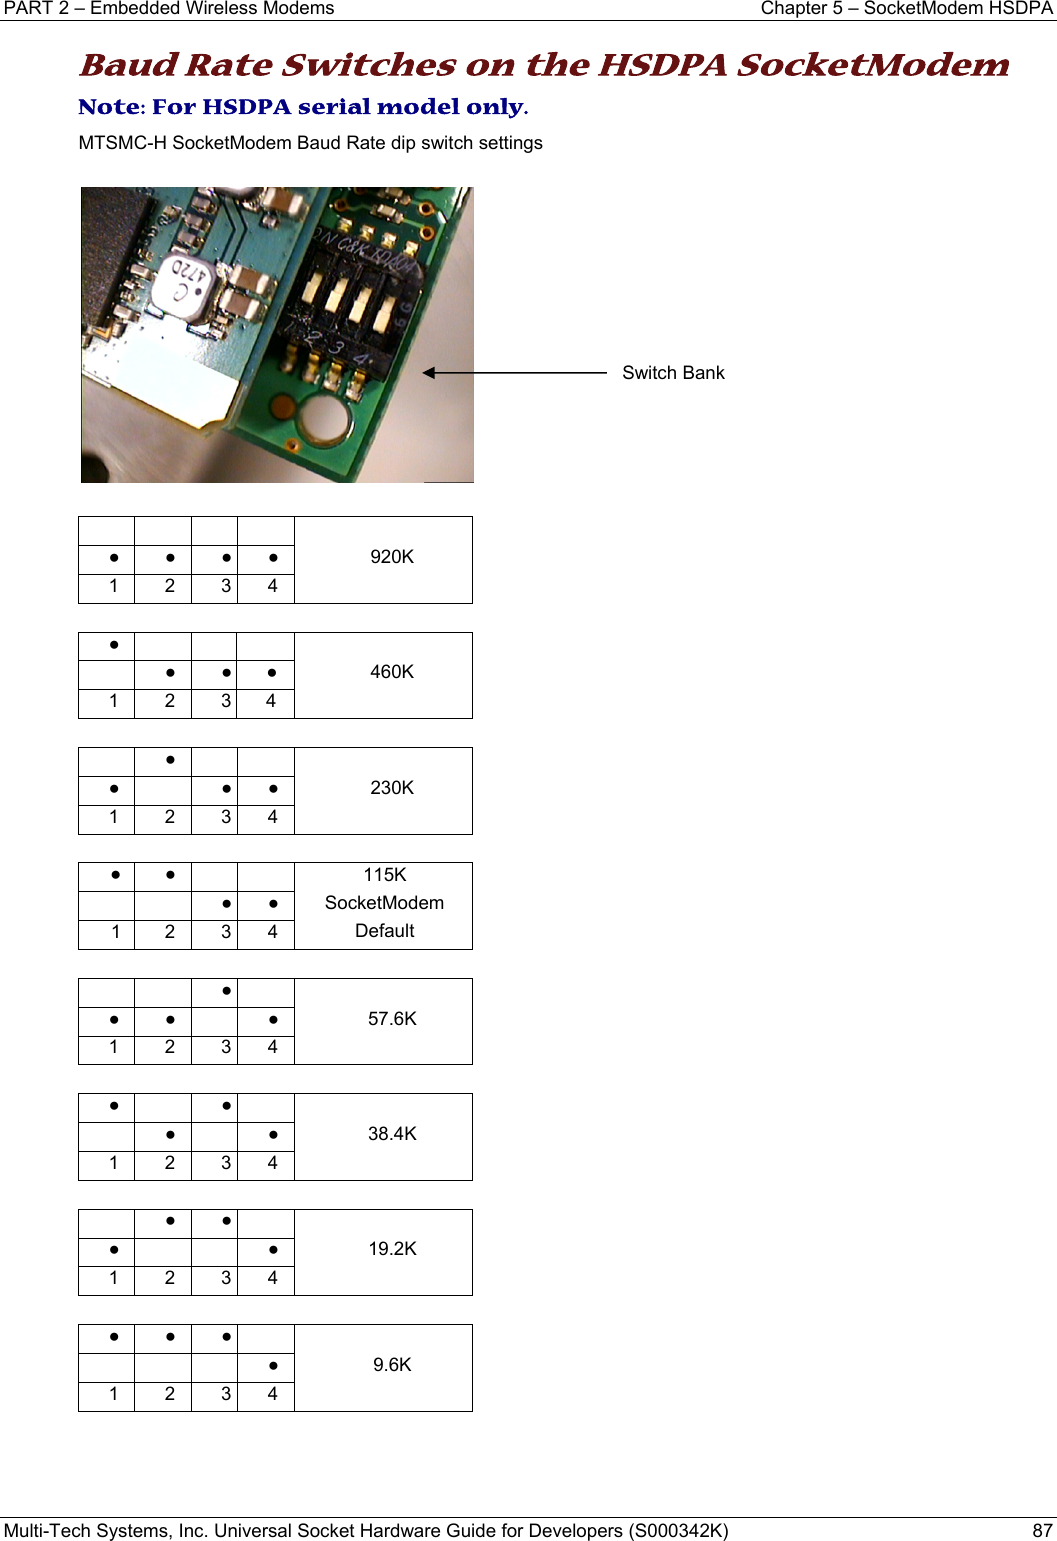 PART 2 – Embedded Wireless Modems  Chapter 5 – SocketModem HSDPA Multi-Tech Systems, Inc. Universal Socket Hardware Guide for Developers (S000342K)  87  Baud Rate Switches on the HSDPA SocketModem Note: For HSDPA serial model only. MTSMC-H SocketModem Baud Rate dip switch settings        920K ● ● ● ● 1 2 3 4  ●     460K  ● ● ● 1 2 3 4   ●   230K ●   ● ● 1 2 3 4  ● ●    115K SocketModem Default     ● ● 1 2  3 4    ●  57.6K ● ●  ● 1 2 3 4  ●   ●  38.4K  ●  ● 1 2 3 4   ● ●  19.2K ●    ● 1 2 3 4  ● ● ●  9.6K    ● 1 2 3 4     Switch Bank 